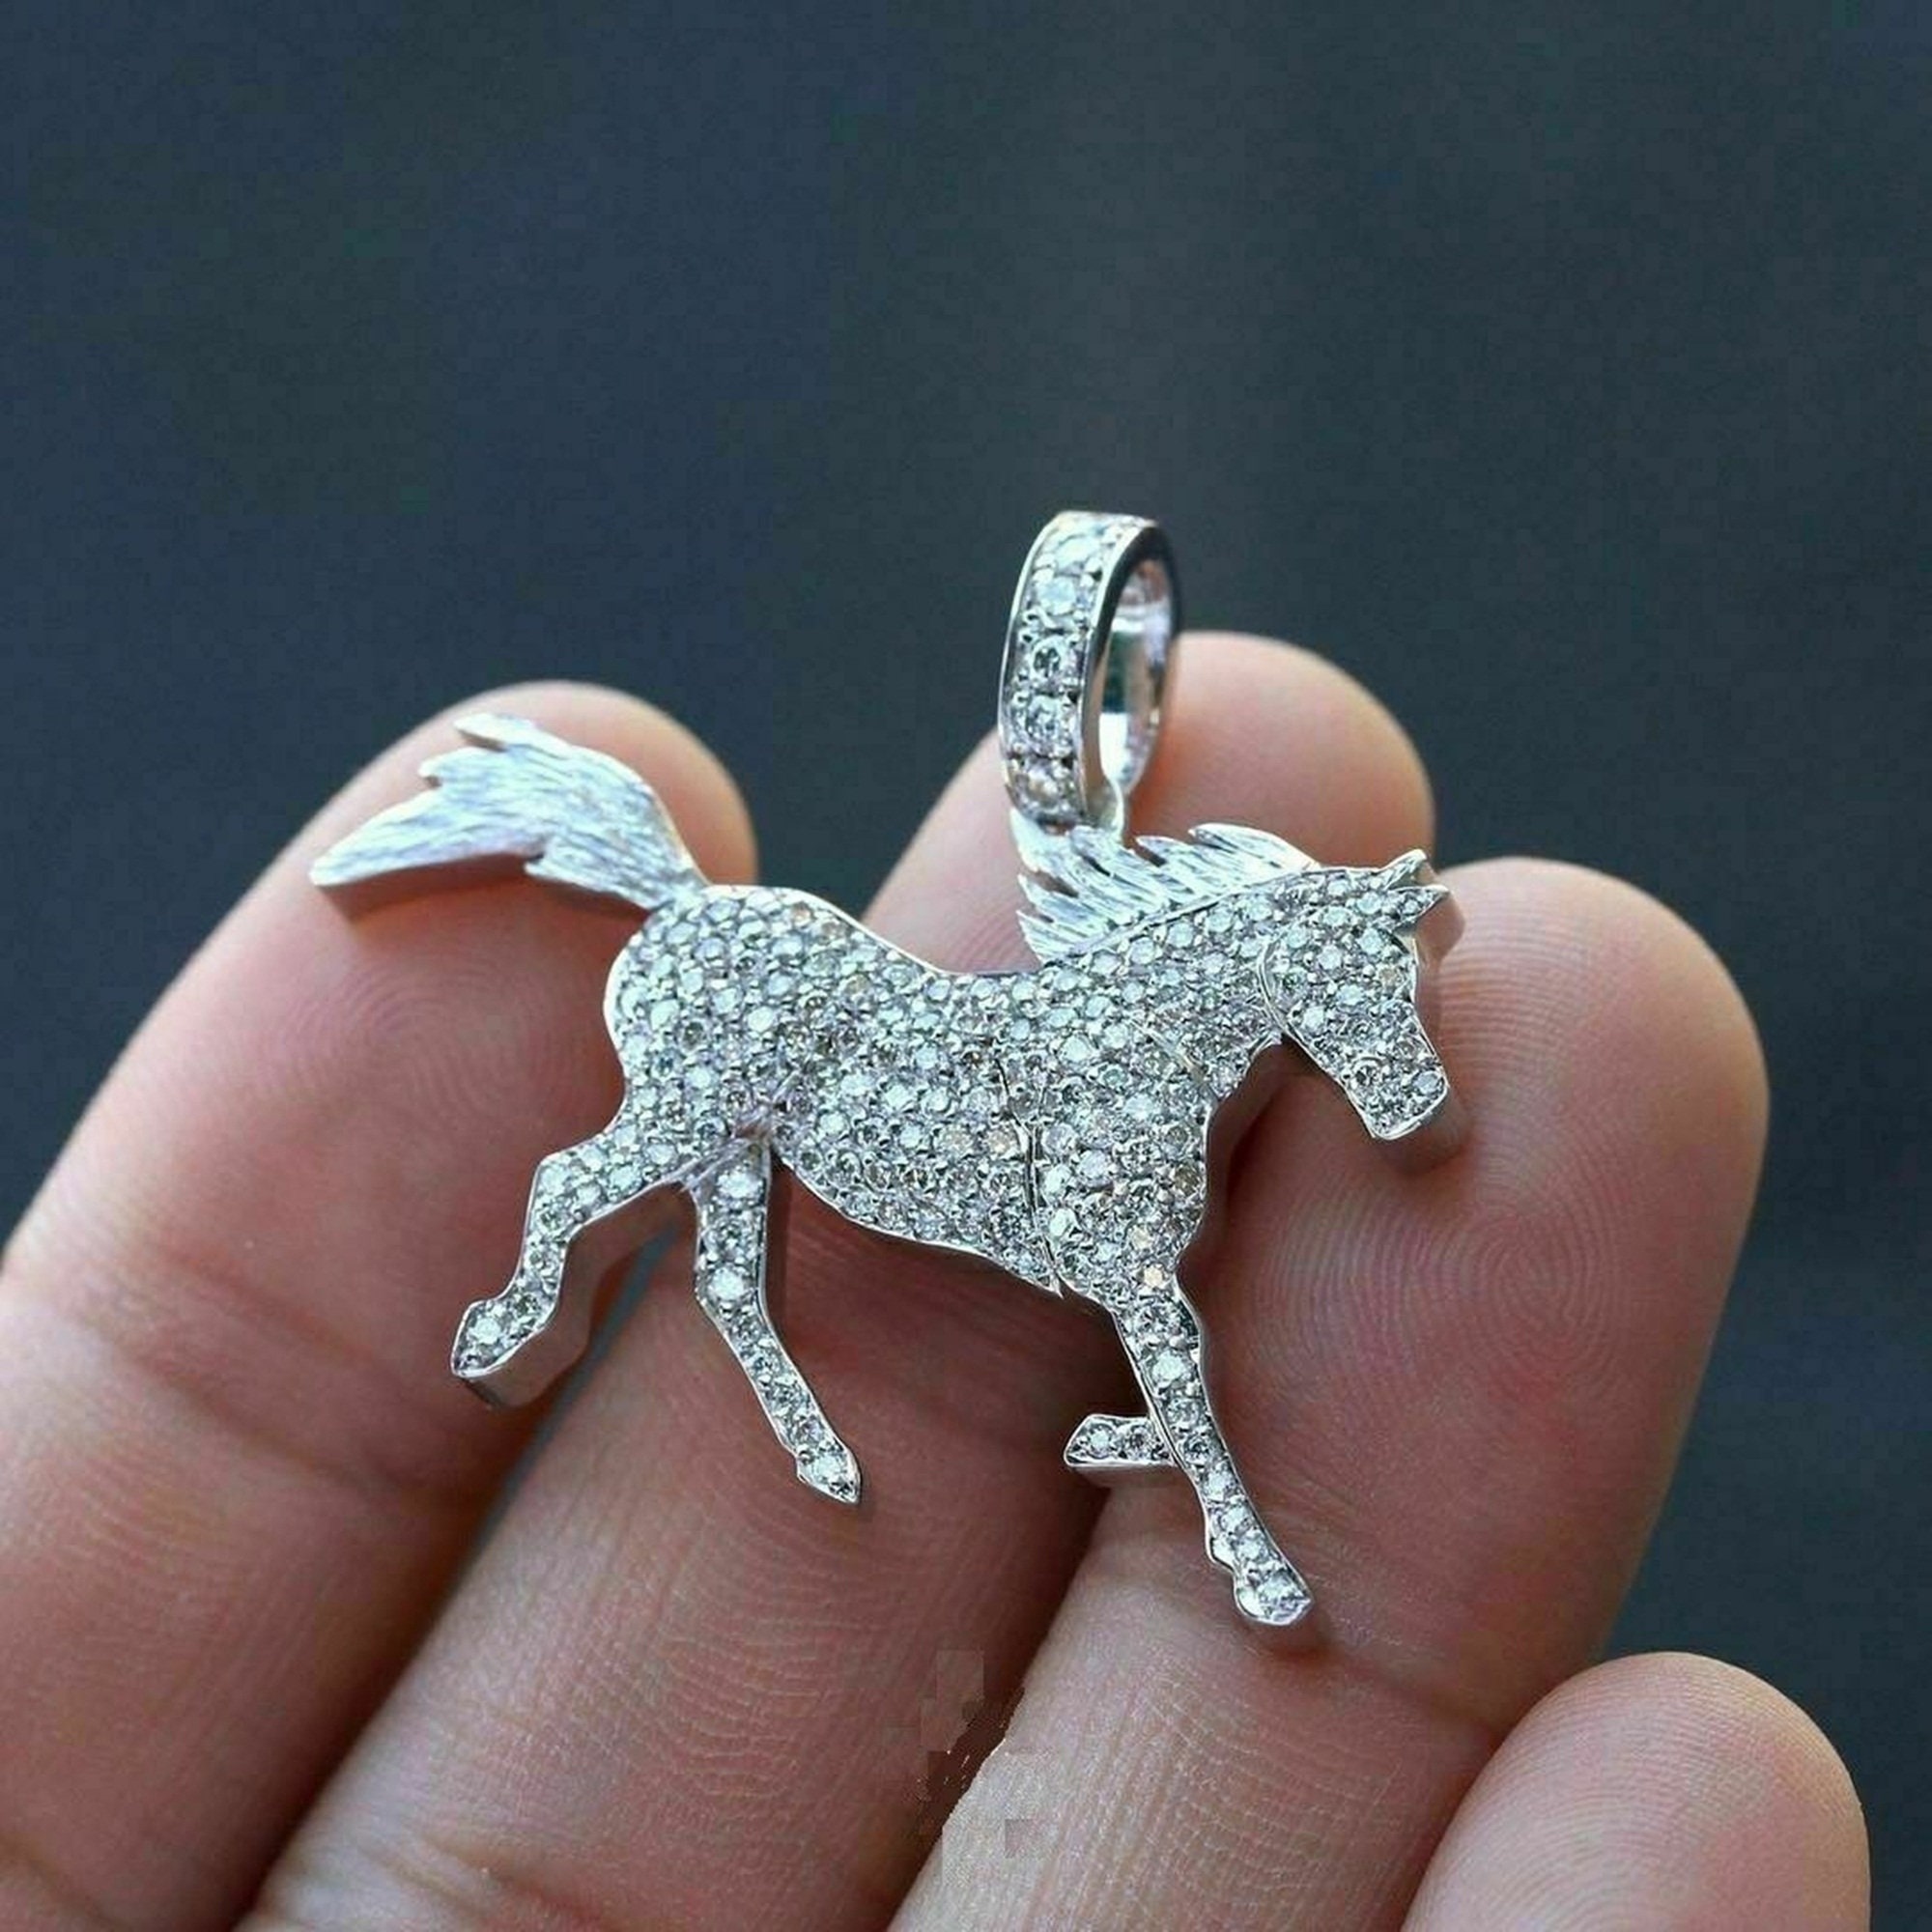 HORSE Shape Animal Inspired Penant Birthday Gift White Gold Finished Men's Or Boy Pendant Round Cut Moissanite Diamond Charm Necklace